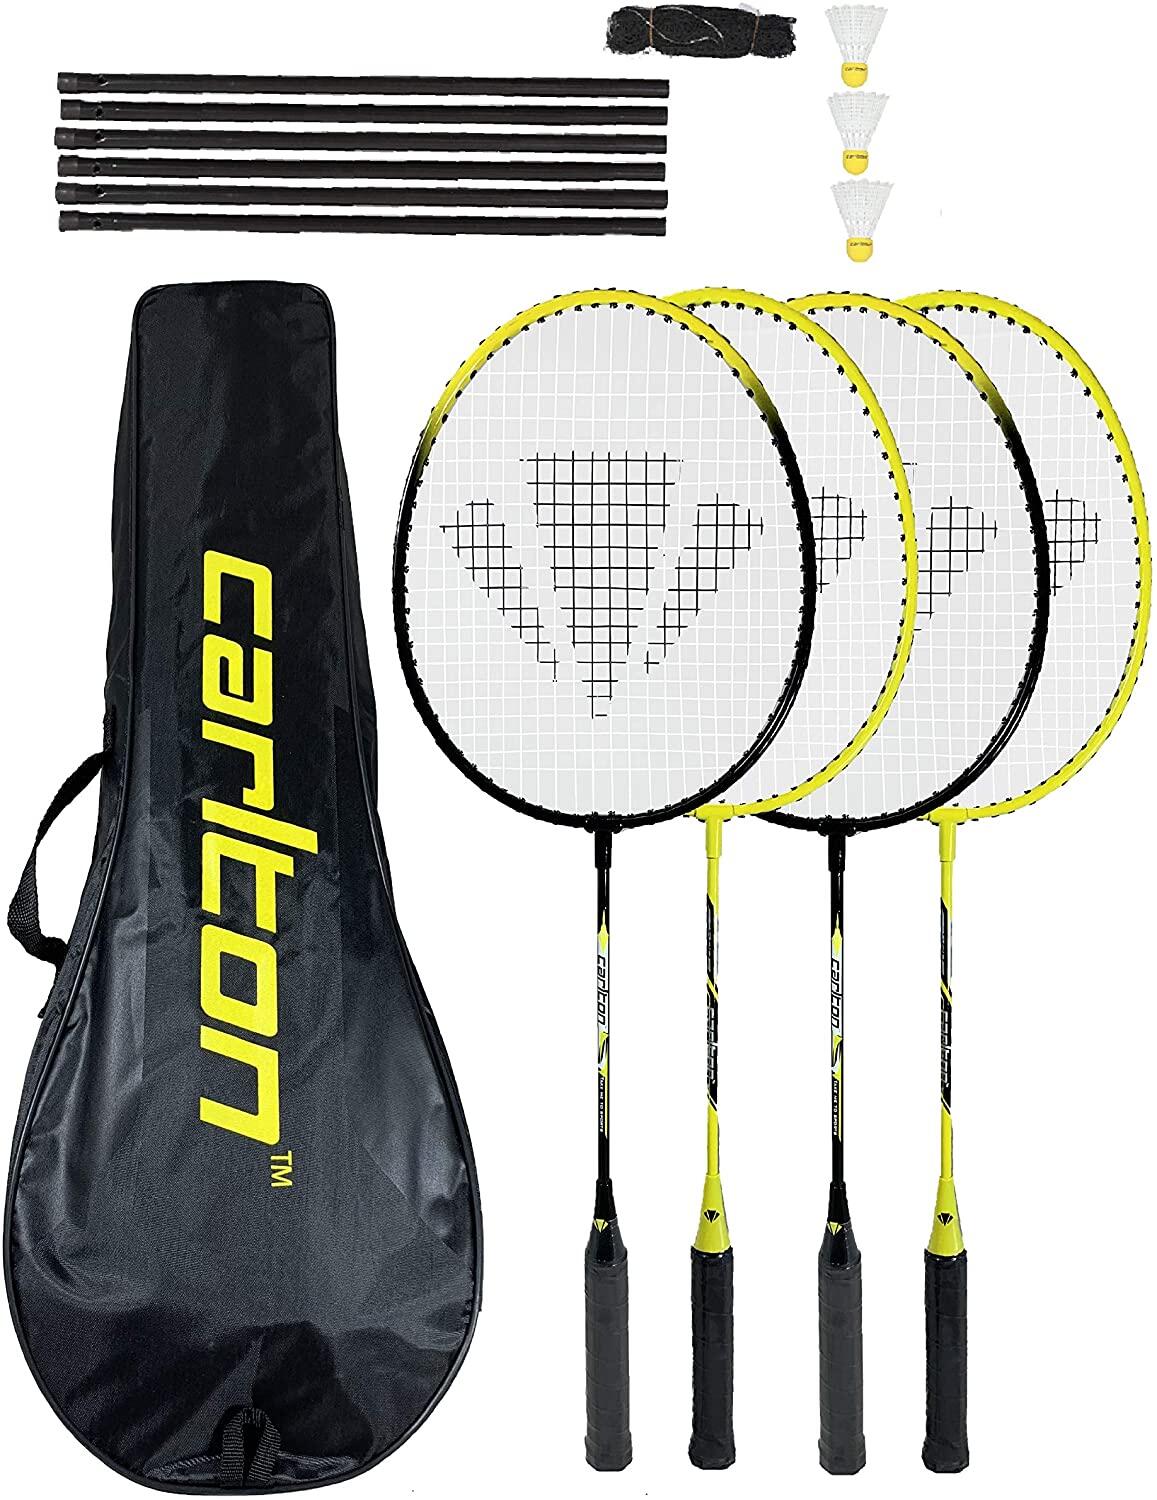 CARLTON Carlton 4 Player Tournament Badminton Set